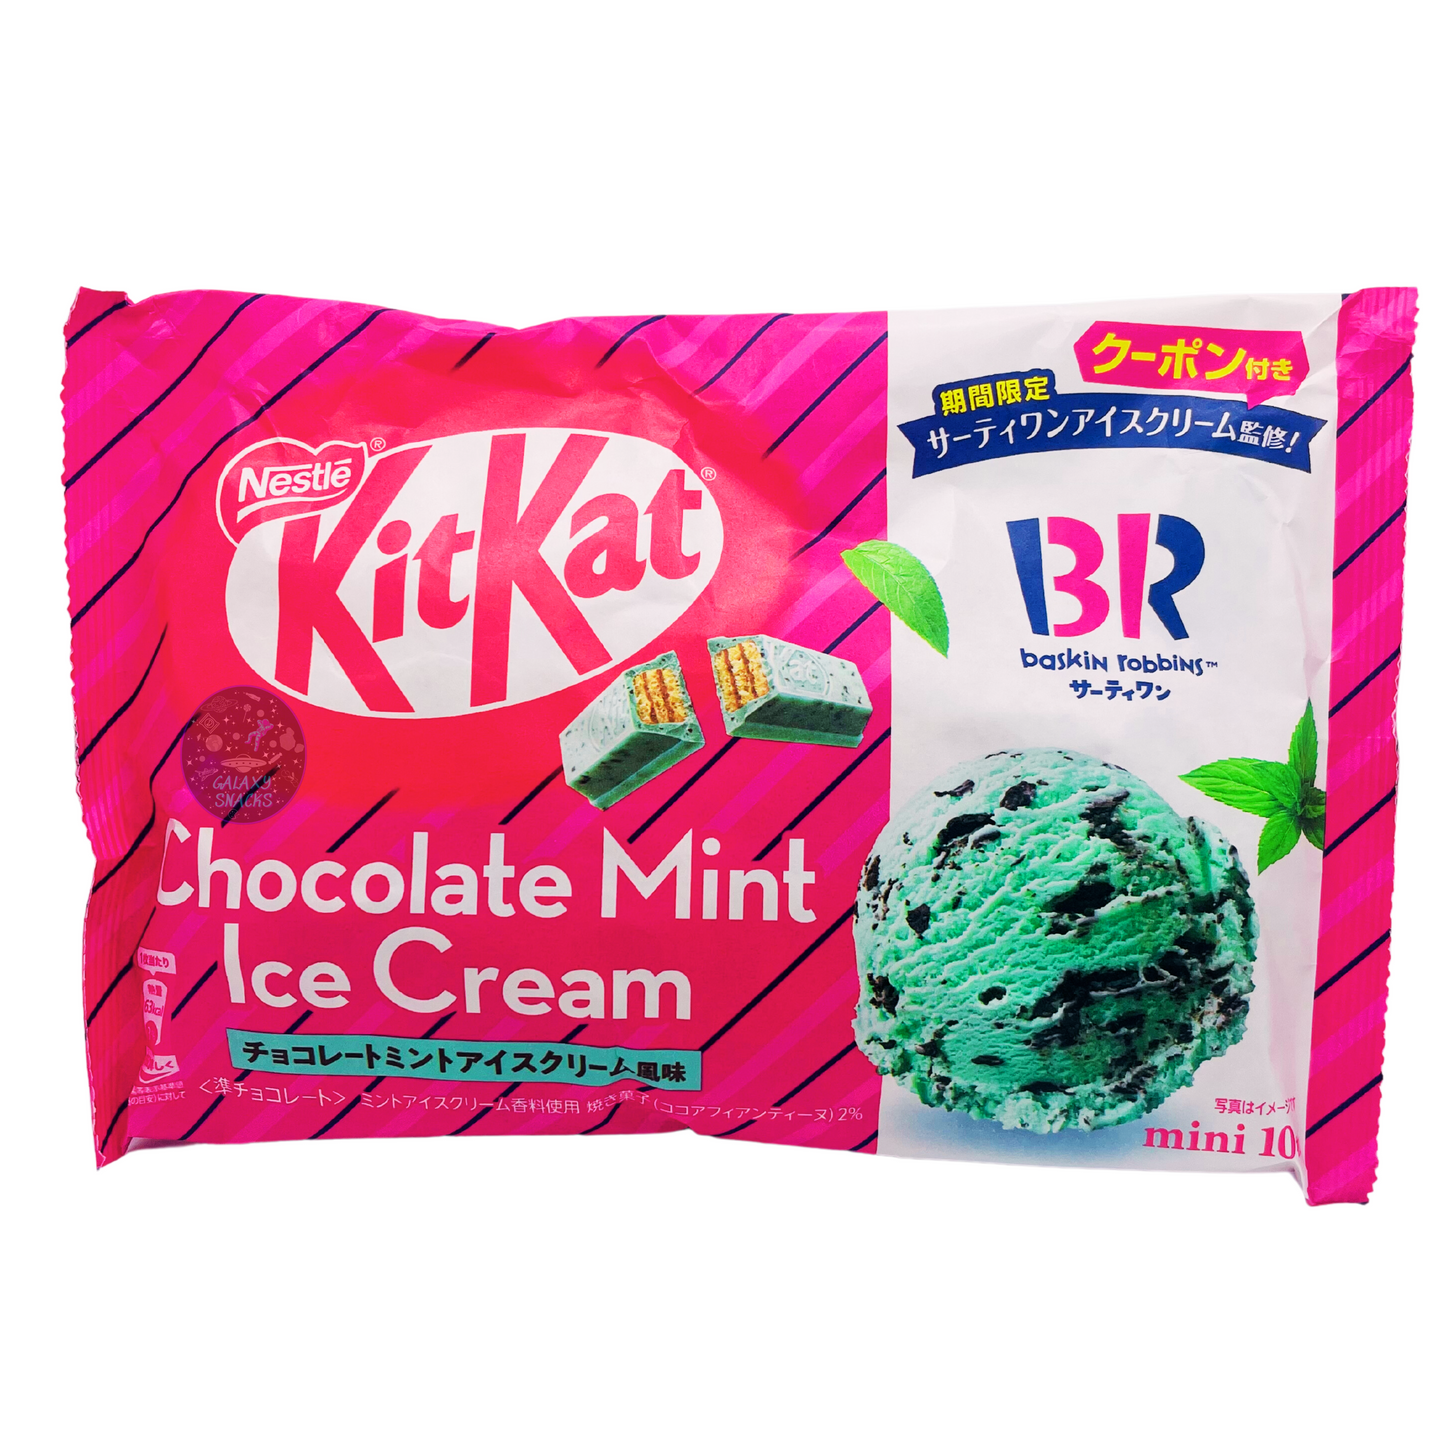 Kit Kat Baskin Robbins Chocolate Mint Ice Cream (Japan)